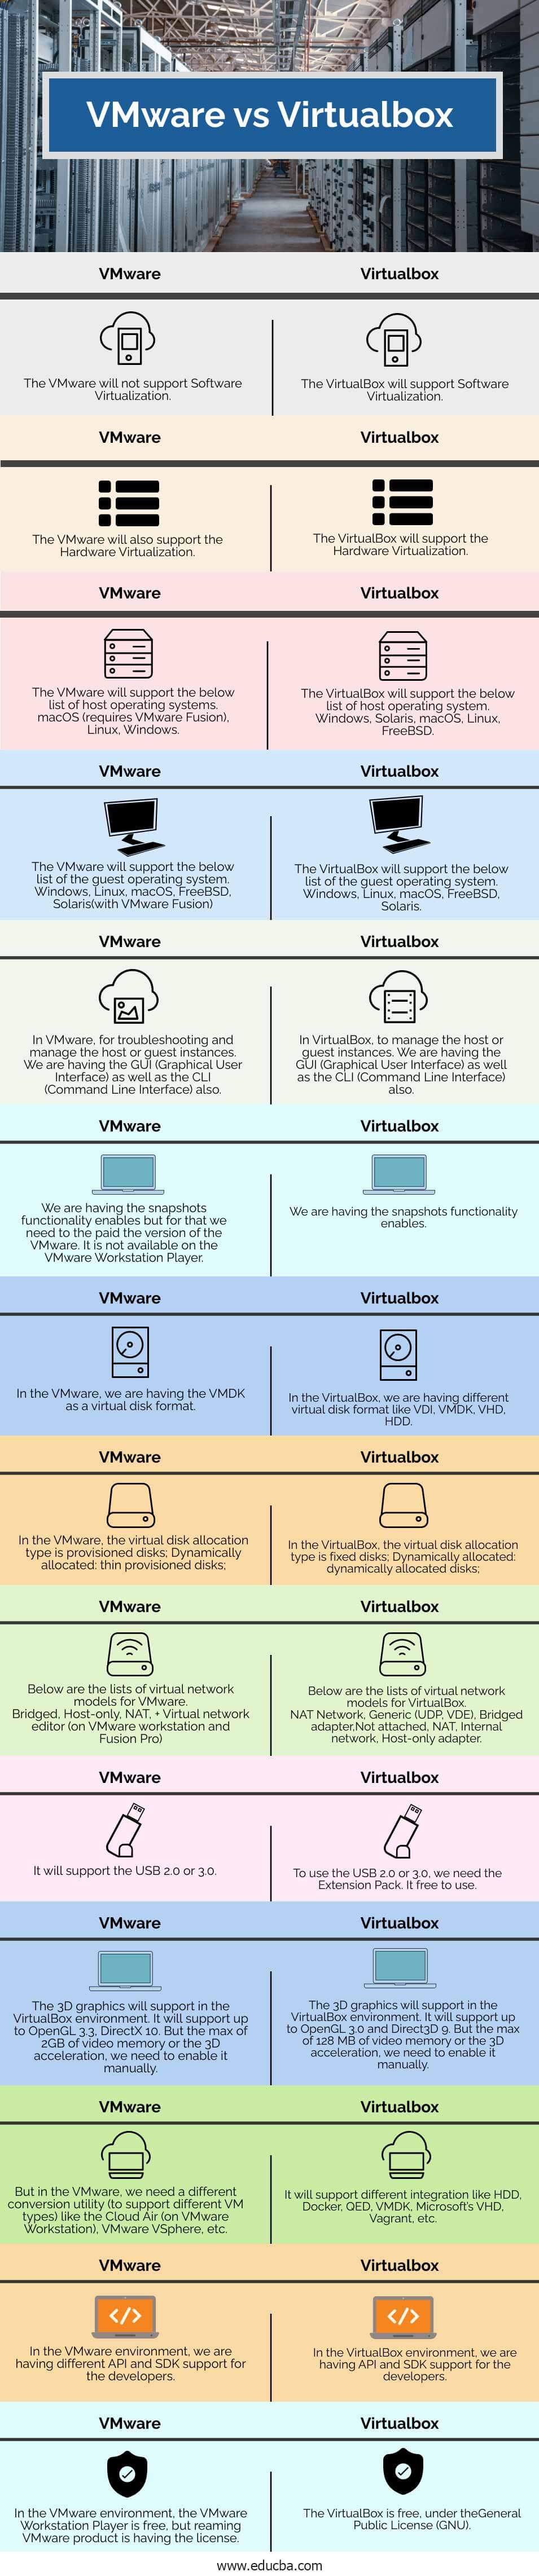 VMware-vs-Virtualbox-info